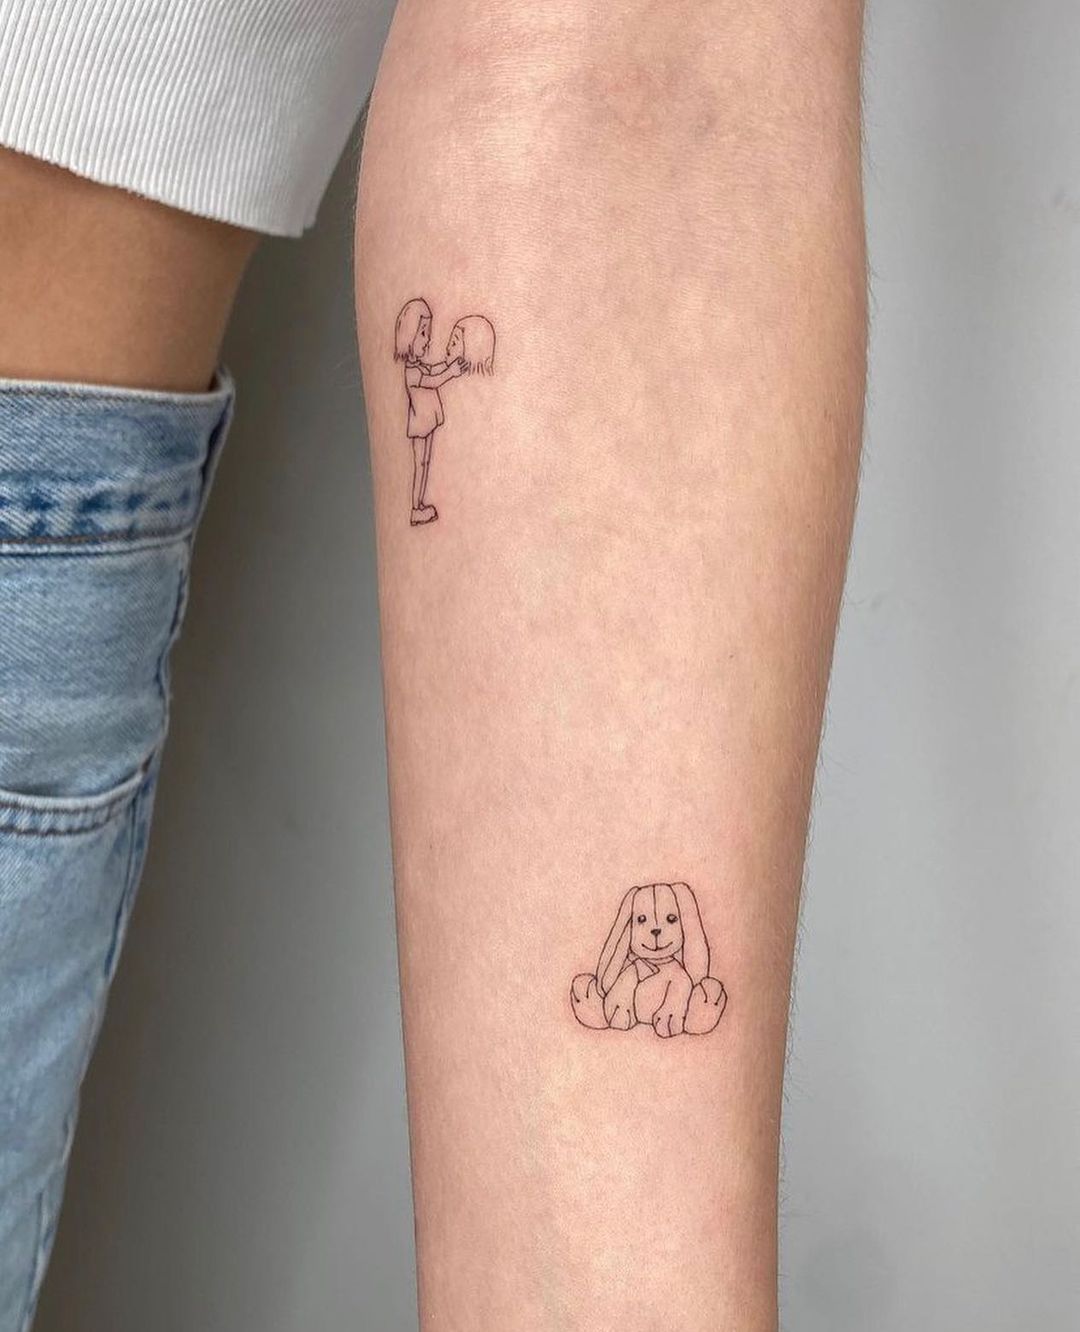 Emma Chamberlain News Updates on Twitter Closeups of Emma Chamberlains 8  new arm tattoos via IG of her tattoo artist dimaaaaits4am Tweet 2 of 2  httpstco06OK5gLgCe  X